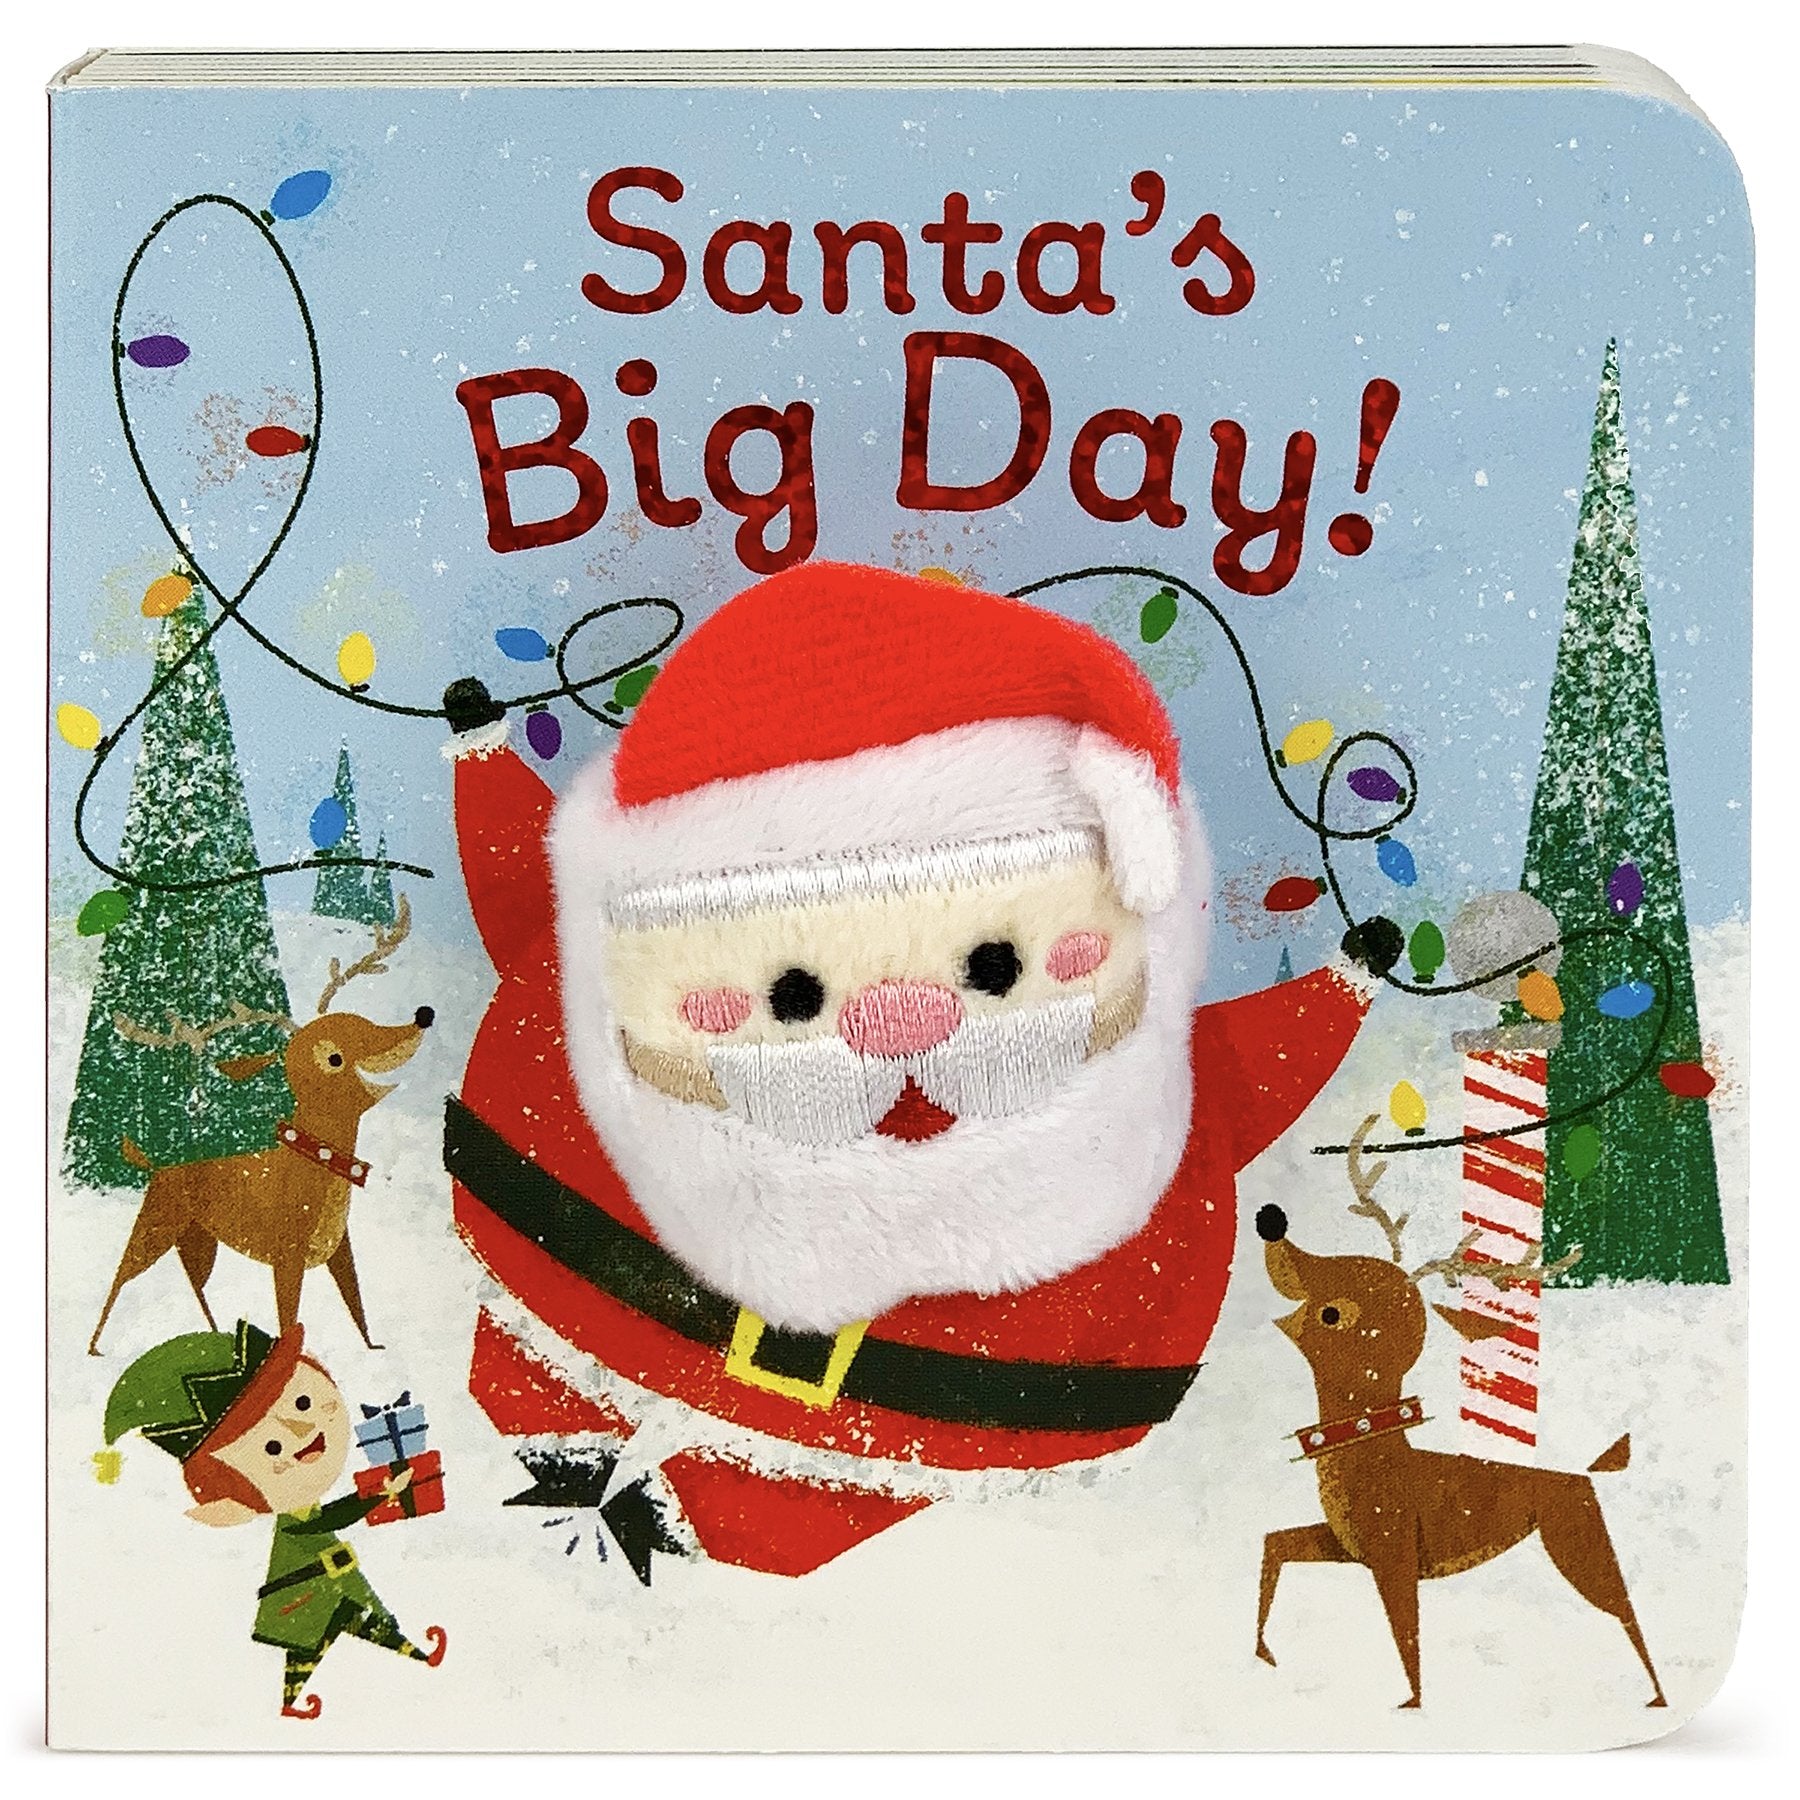 Santa's Big Day! - Finger Puppet Book    